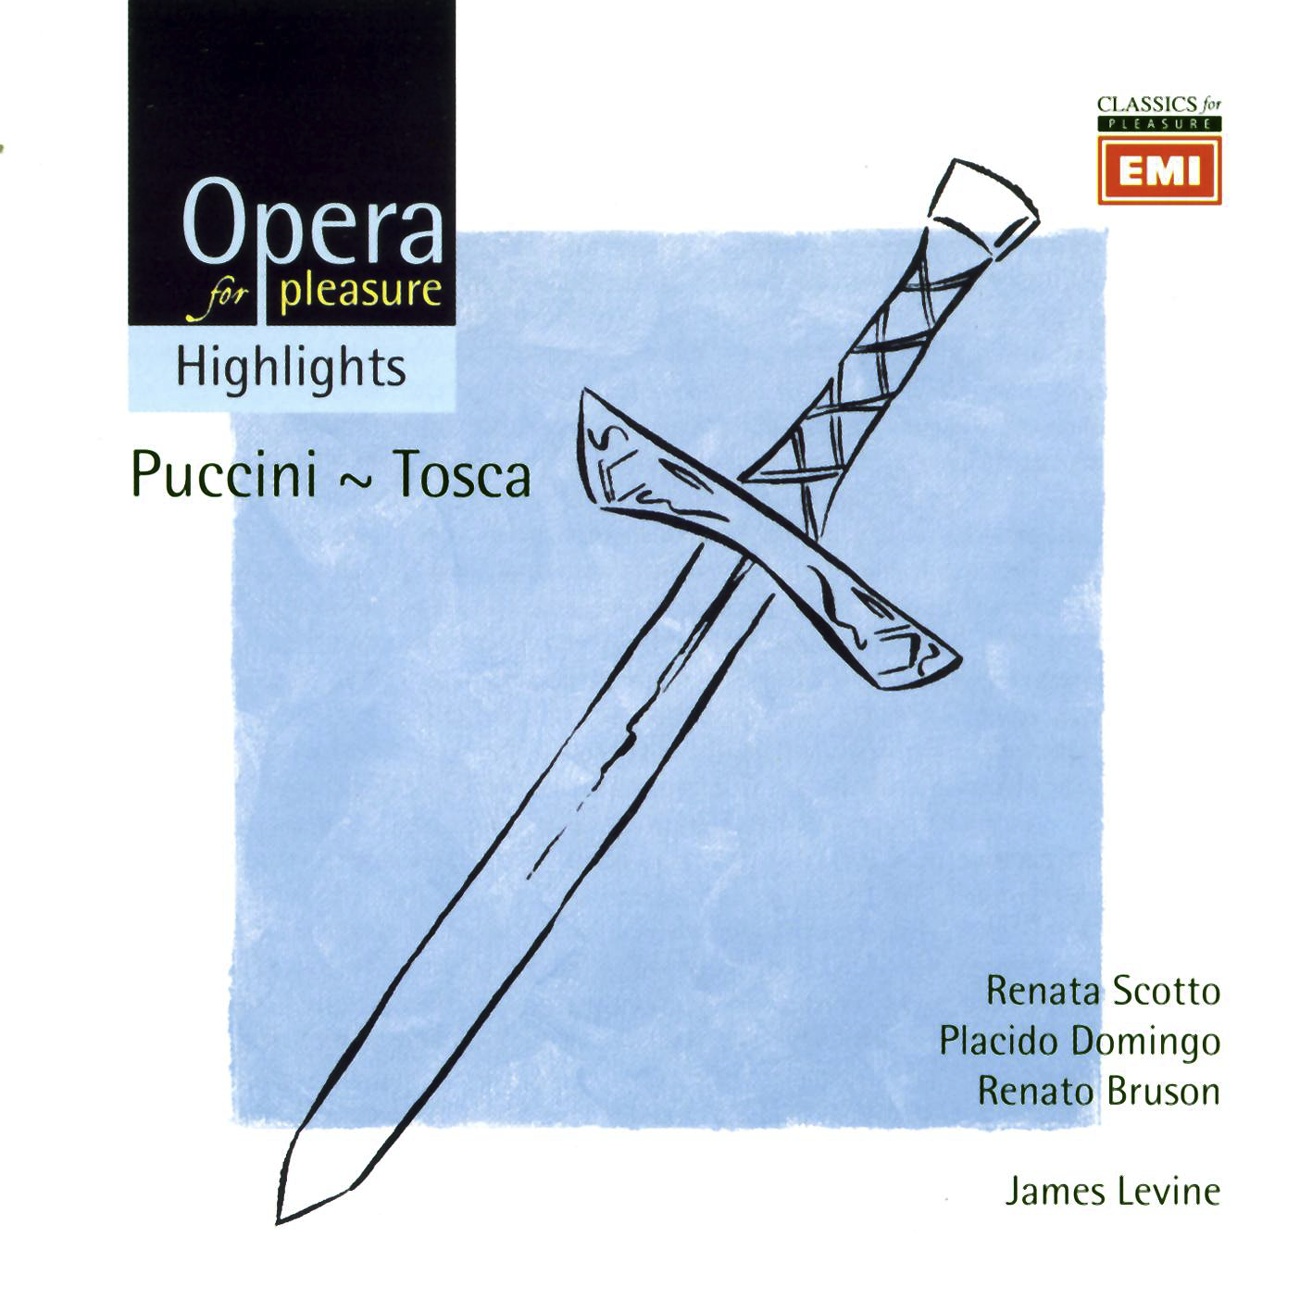 Tosca - Opera in three acts (1997 Digital Remaster), Act II: Vissi d'arte (Tosca)